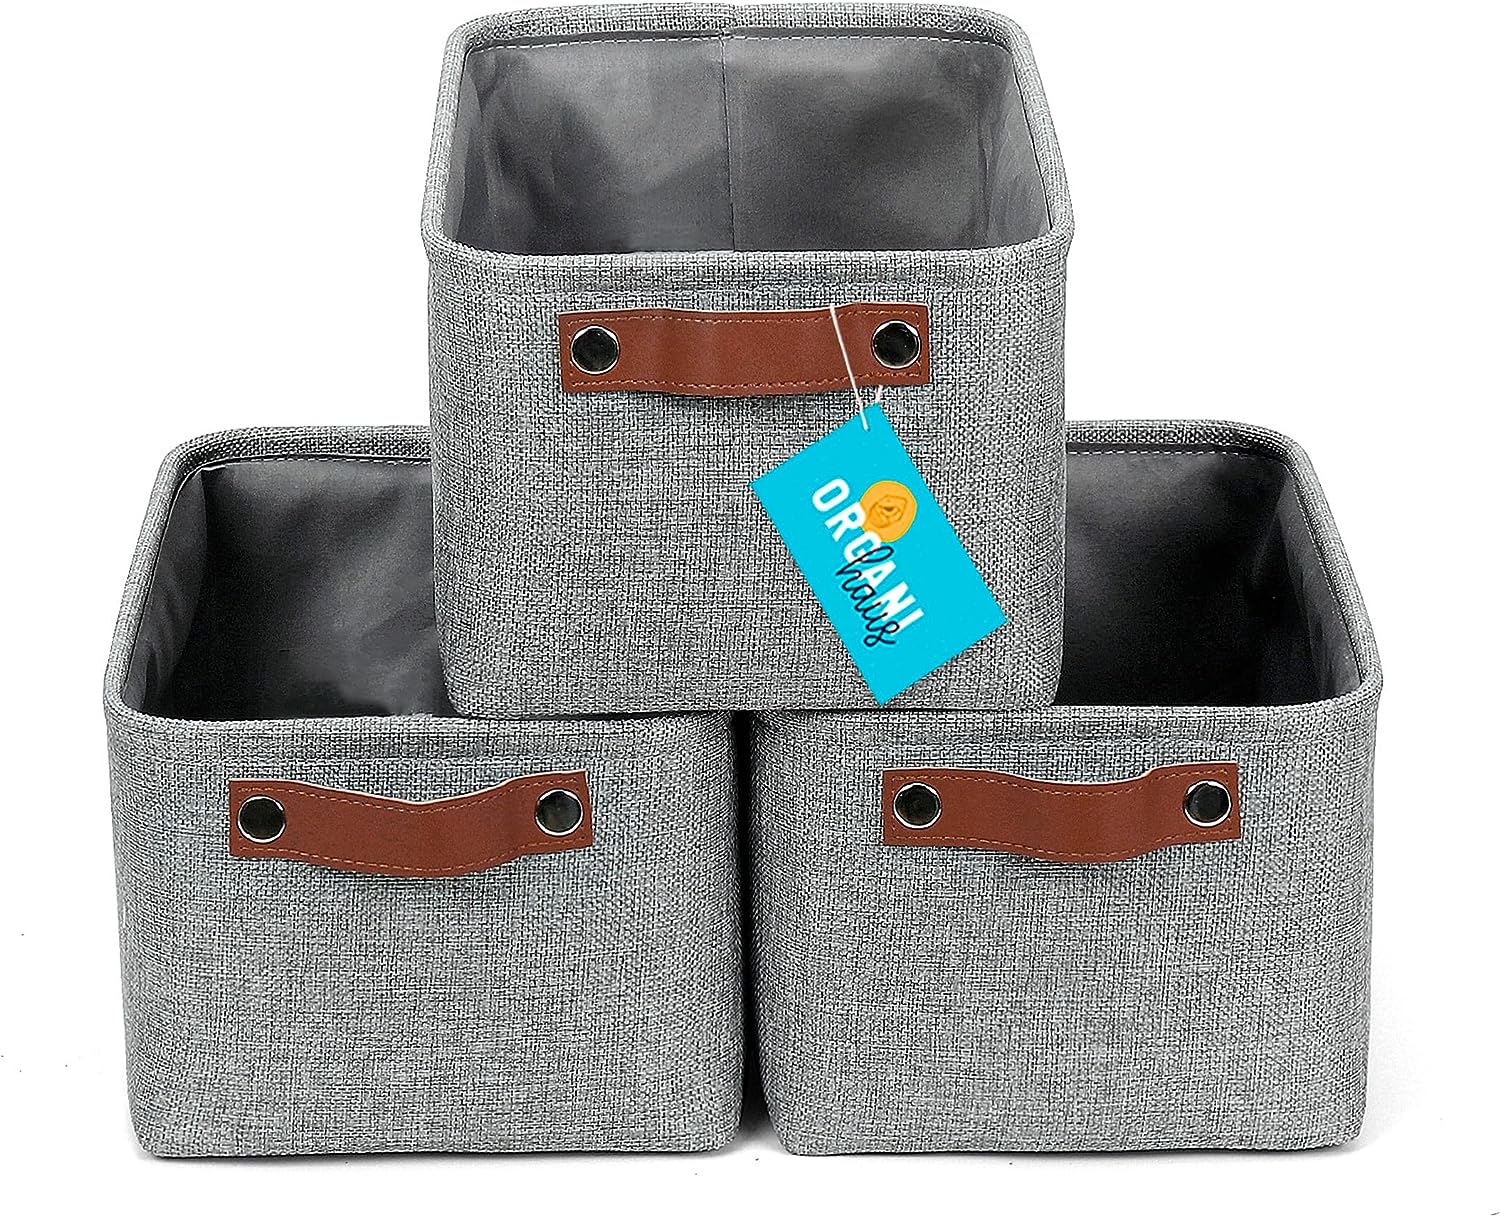 Blushbees® Medium Fabric Storage Baskets - 3 Pack (Navy Blue/White)